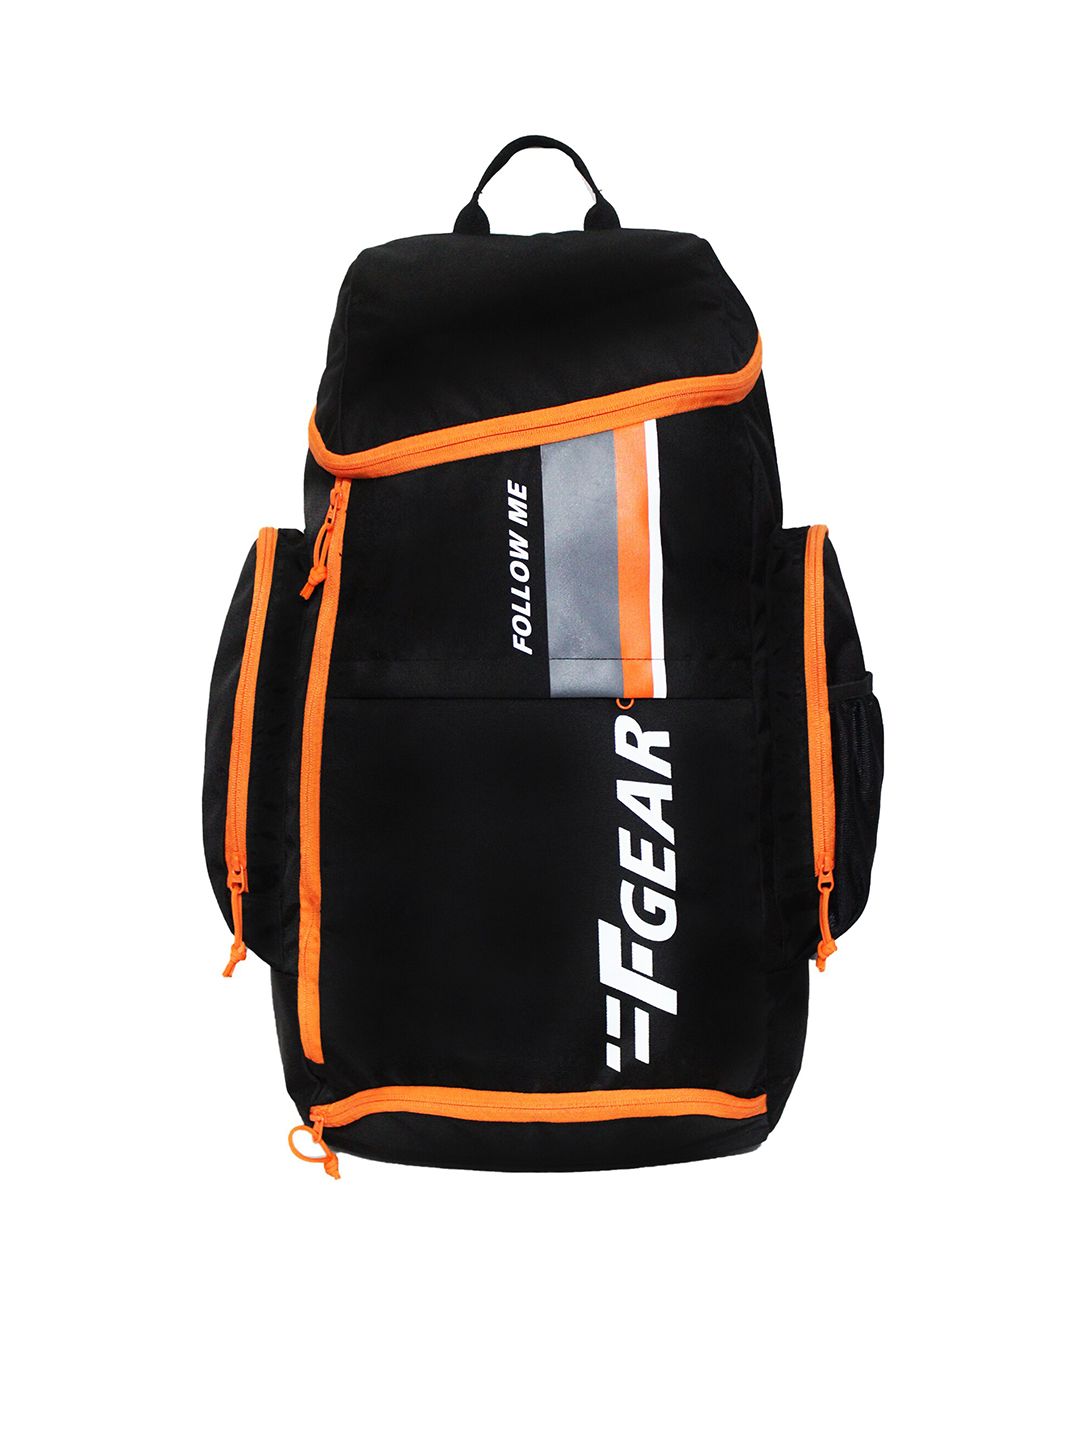 F Gear Unisex Black & Orange Typography Printed Backpack Price in India